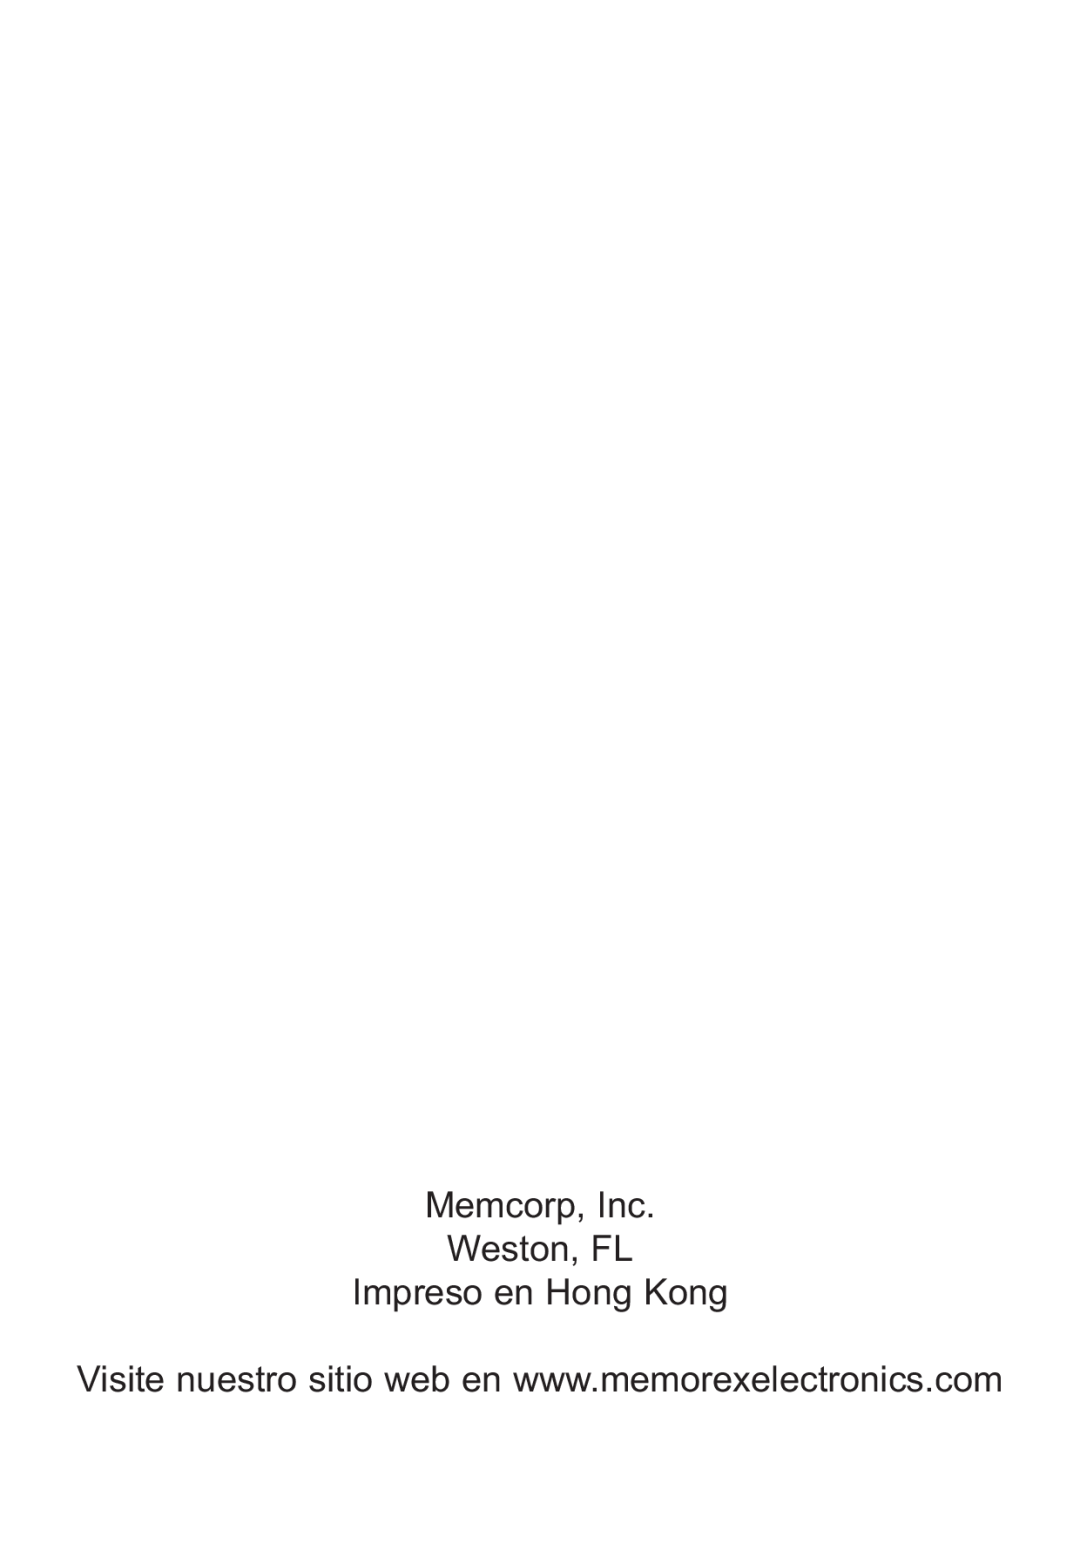 Memorex Mi1006 manual Memcorp, Inc Weston, FL Impreso en Hong Kong 